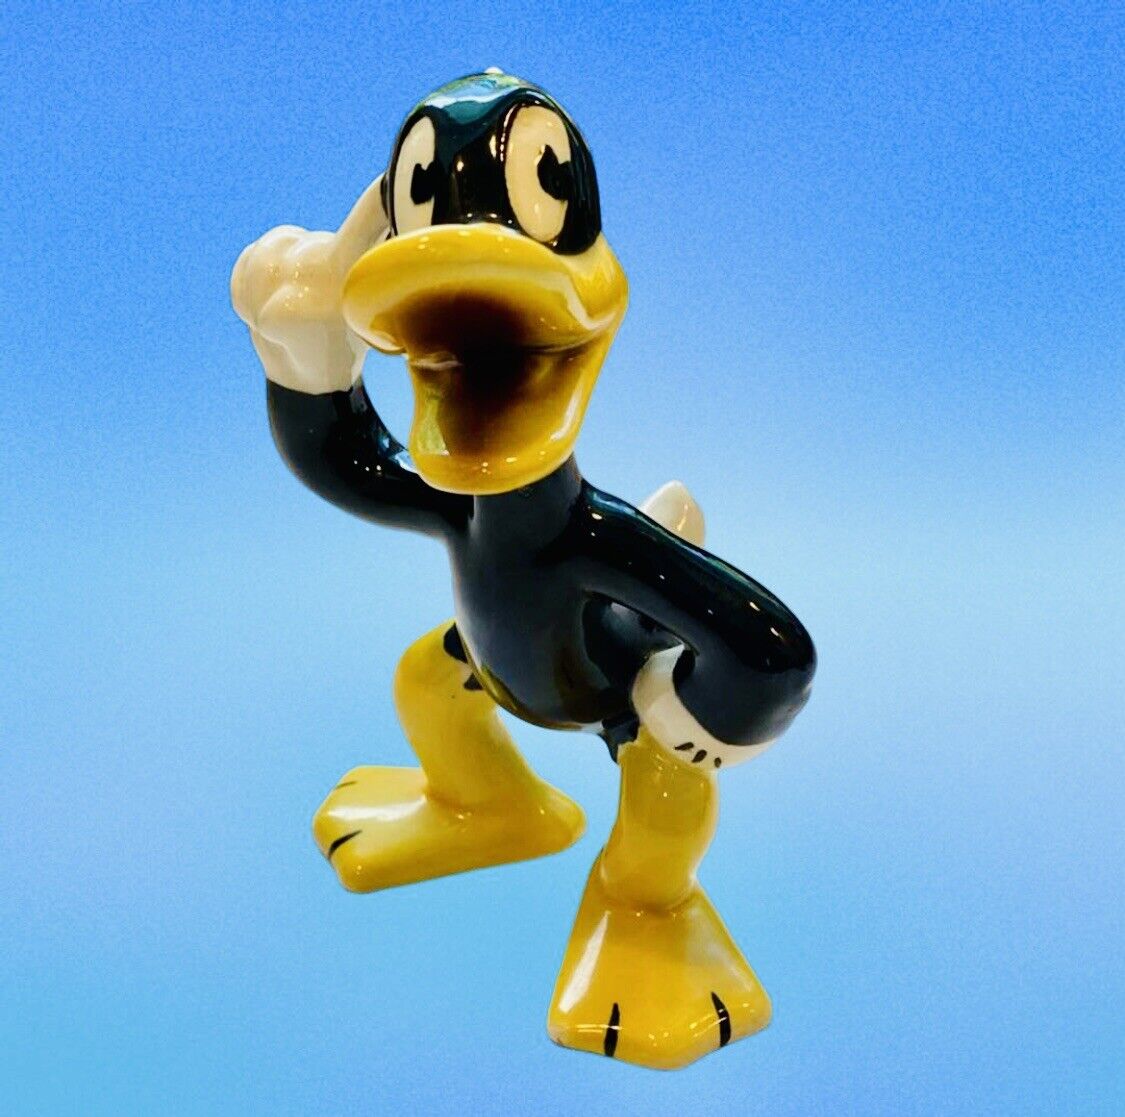 Warner Brothers Shaw Daffy Duck Ceramic Figurine 1940's Era Hard To Find, Minty